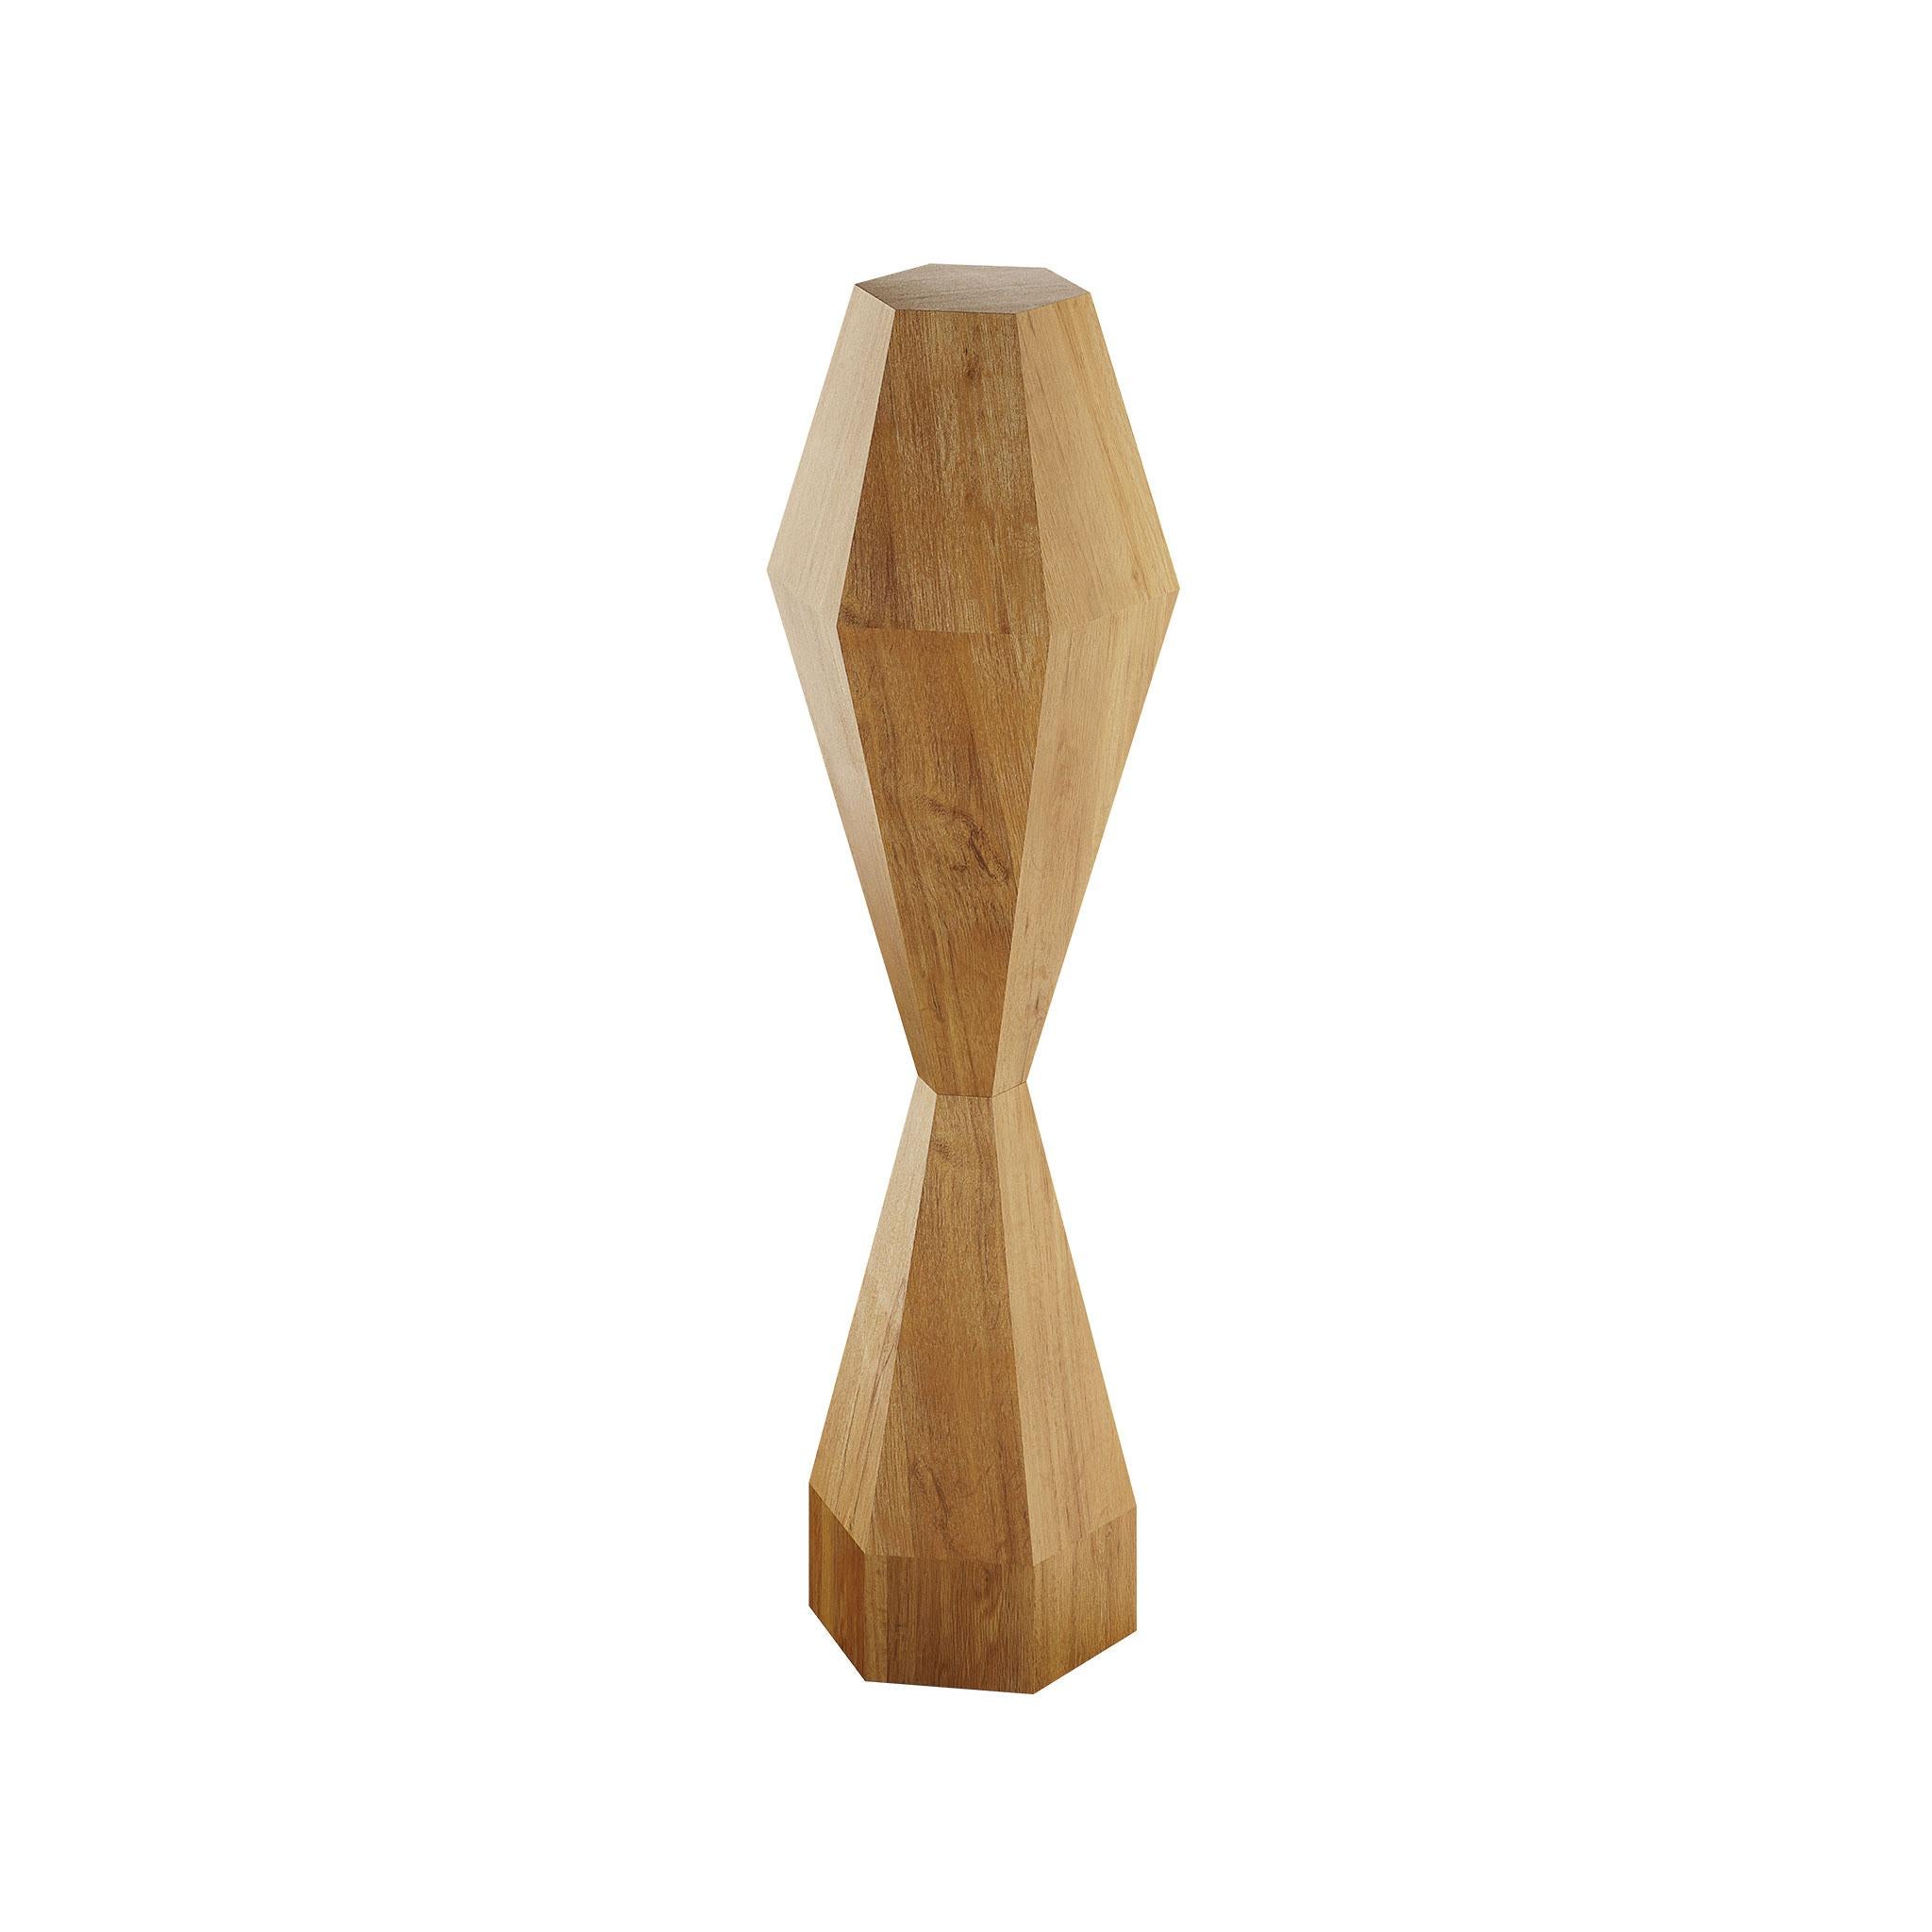 Hand-Carved Modern Customizable Faceted Wood Totem Sculpture Pole in Oak Matte Veneer For Sale